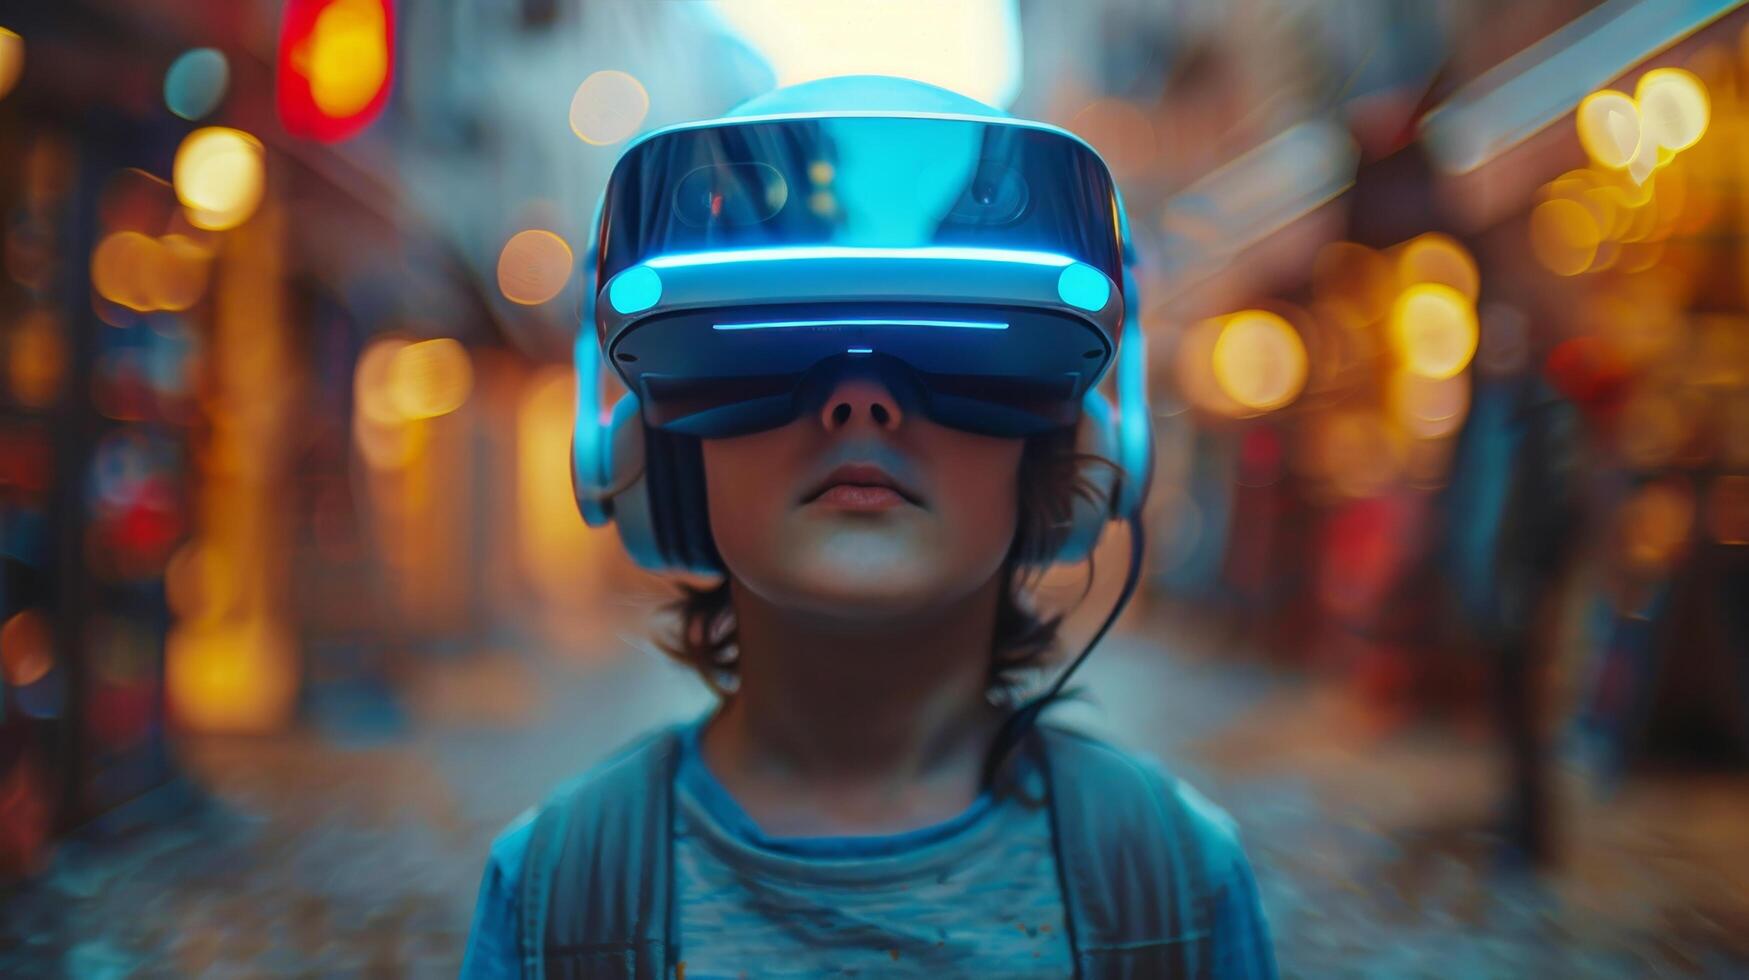 Young Boy Wearing Virtual Reality Headset photo